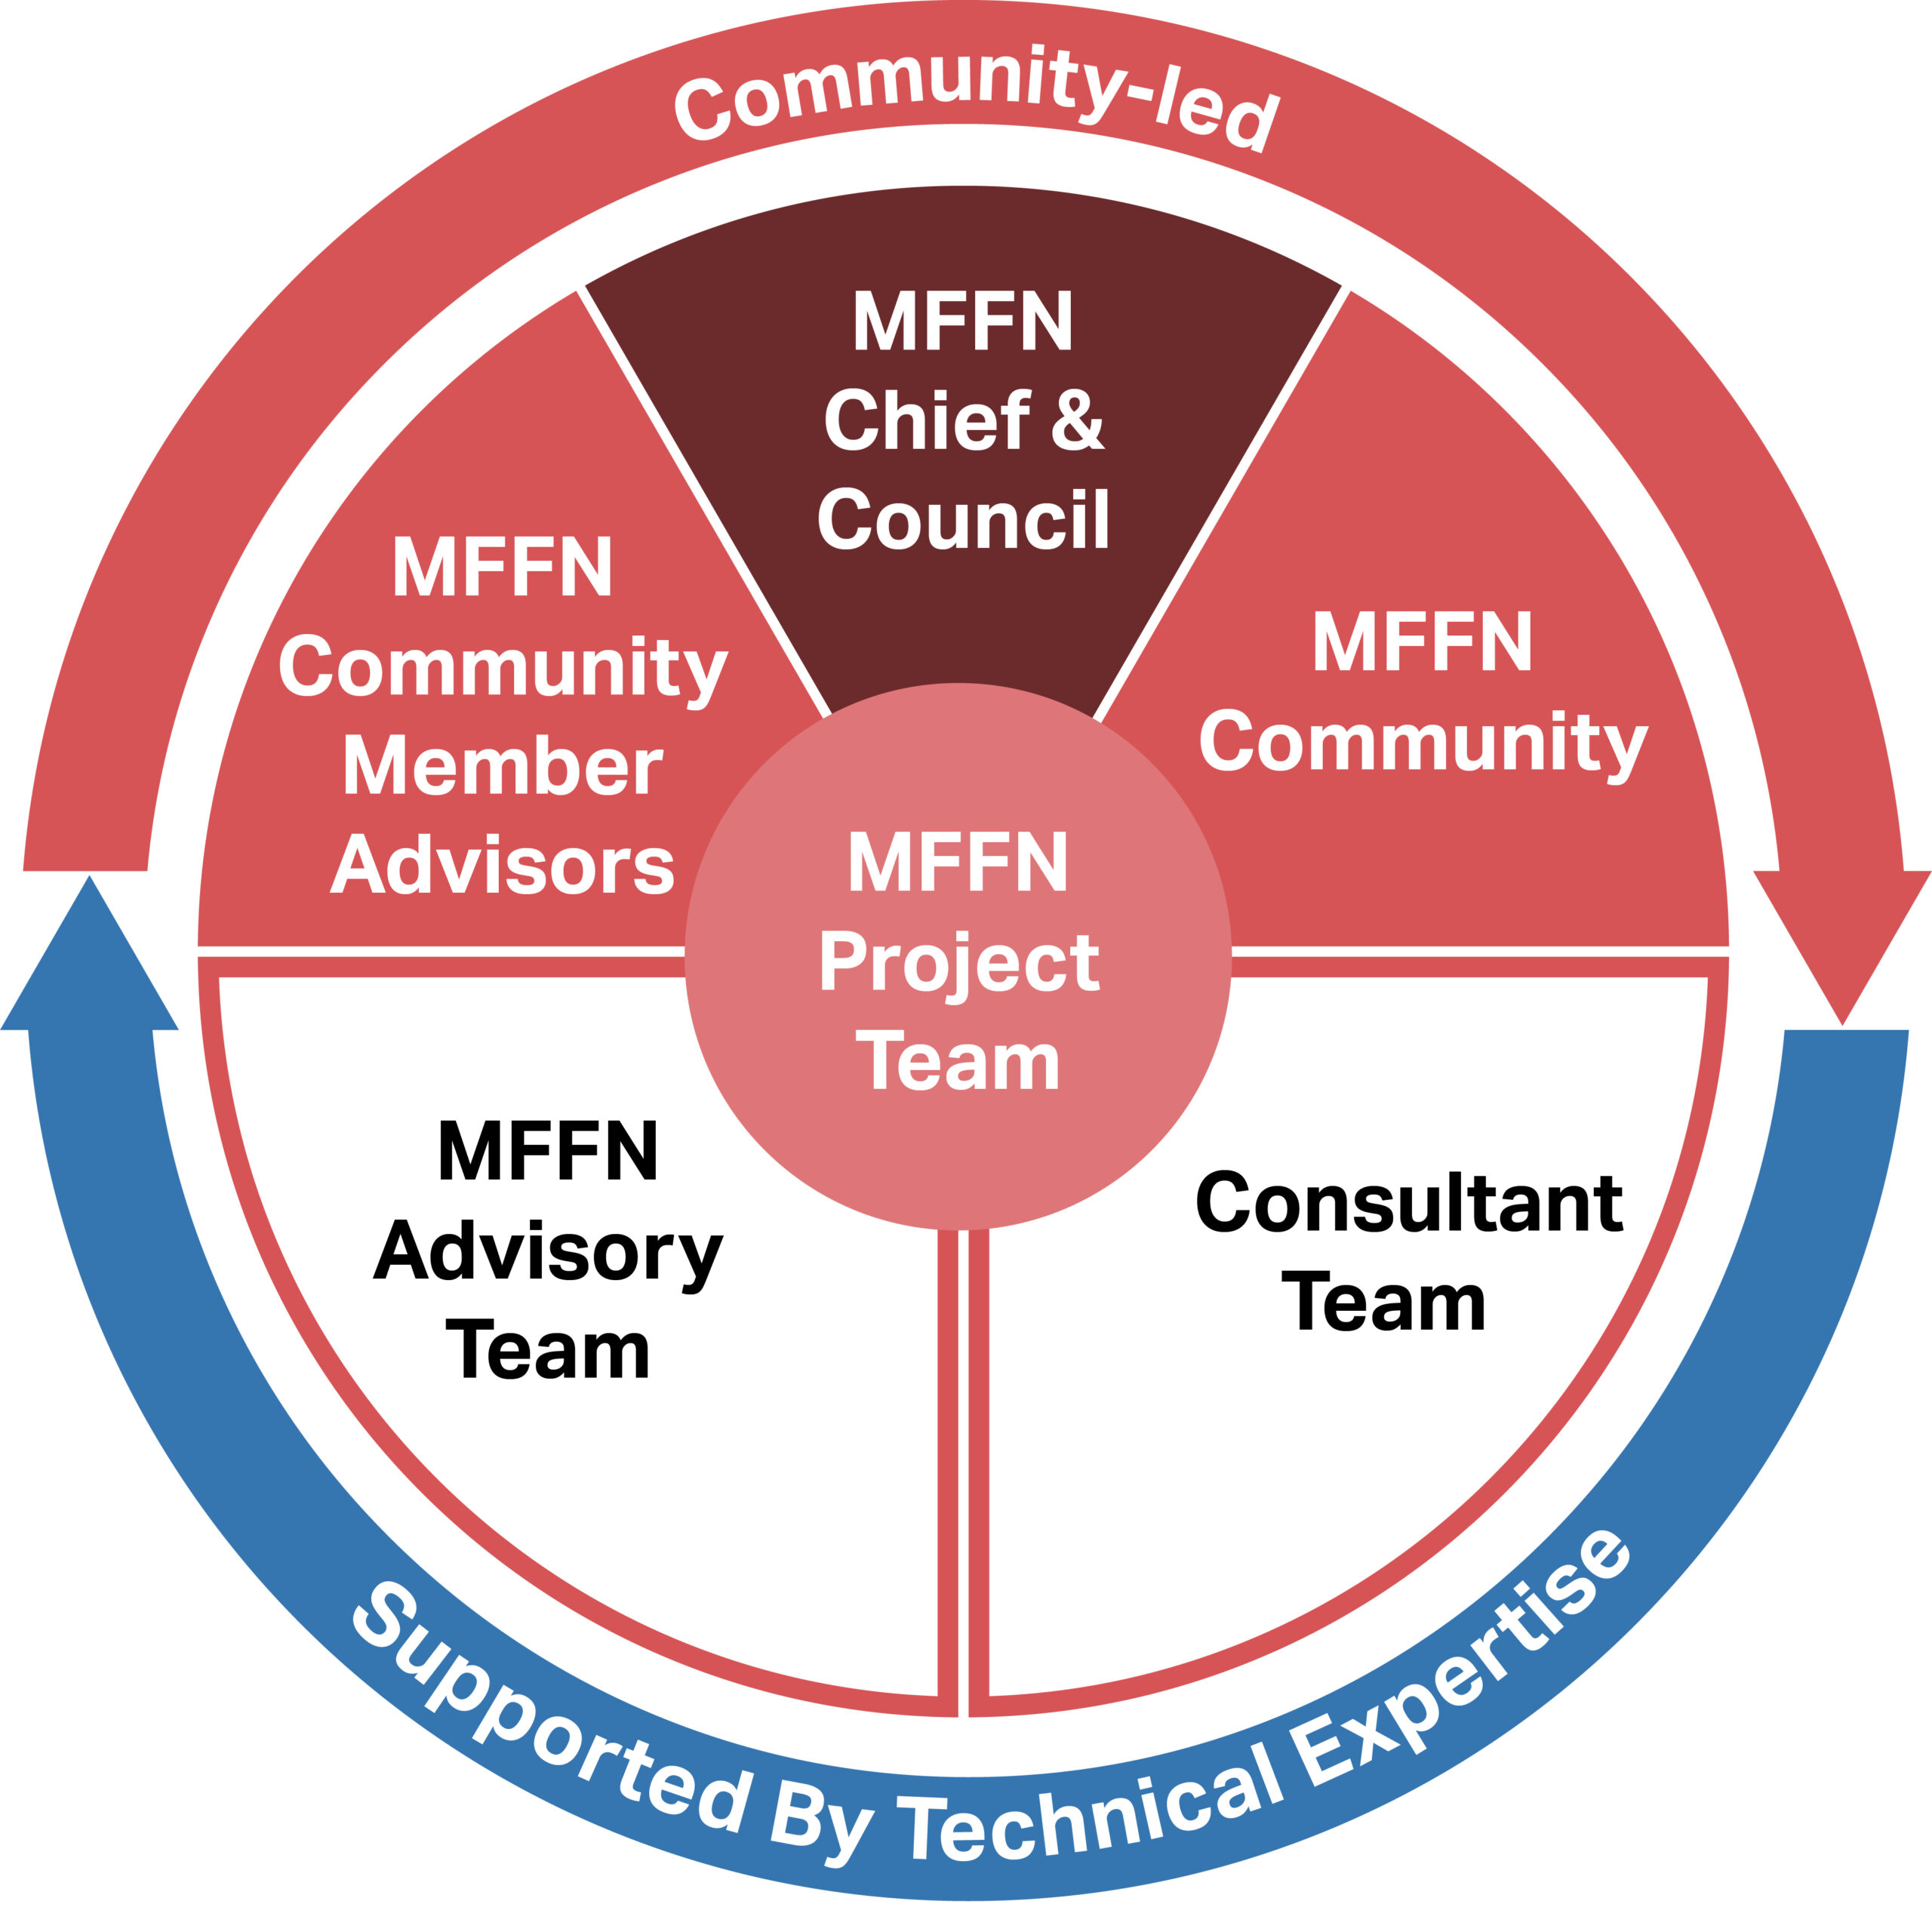 MFFN Project Team Community-Led